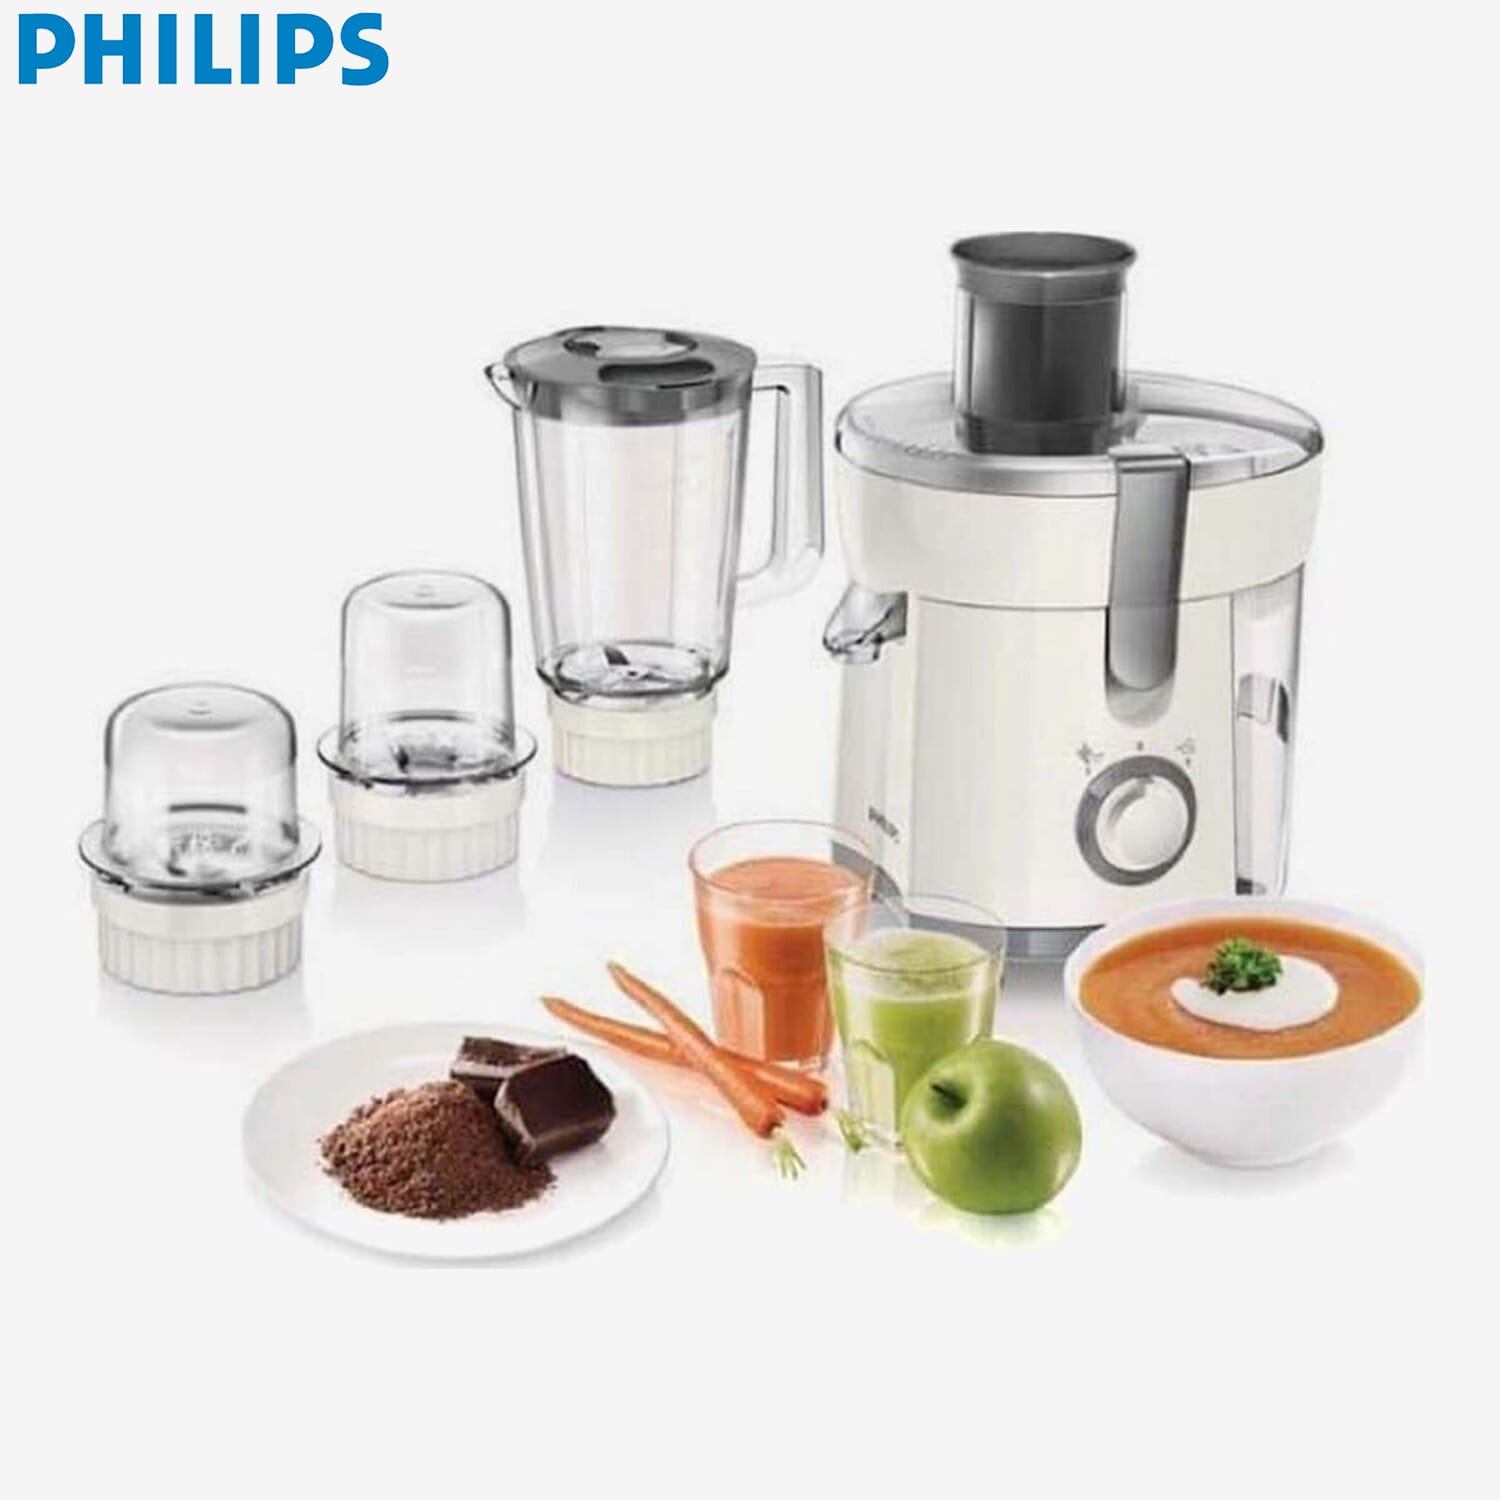 Philips Juicer Mixer Blender